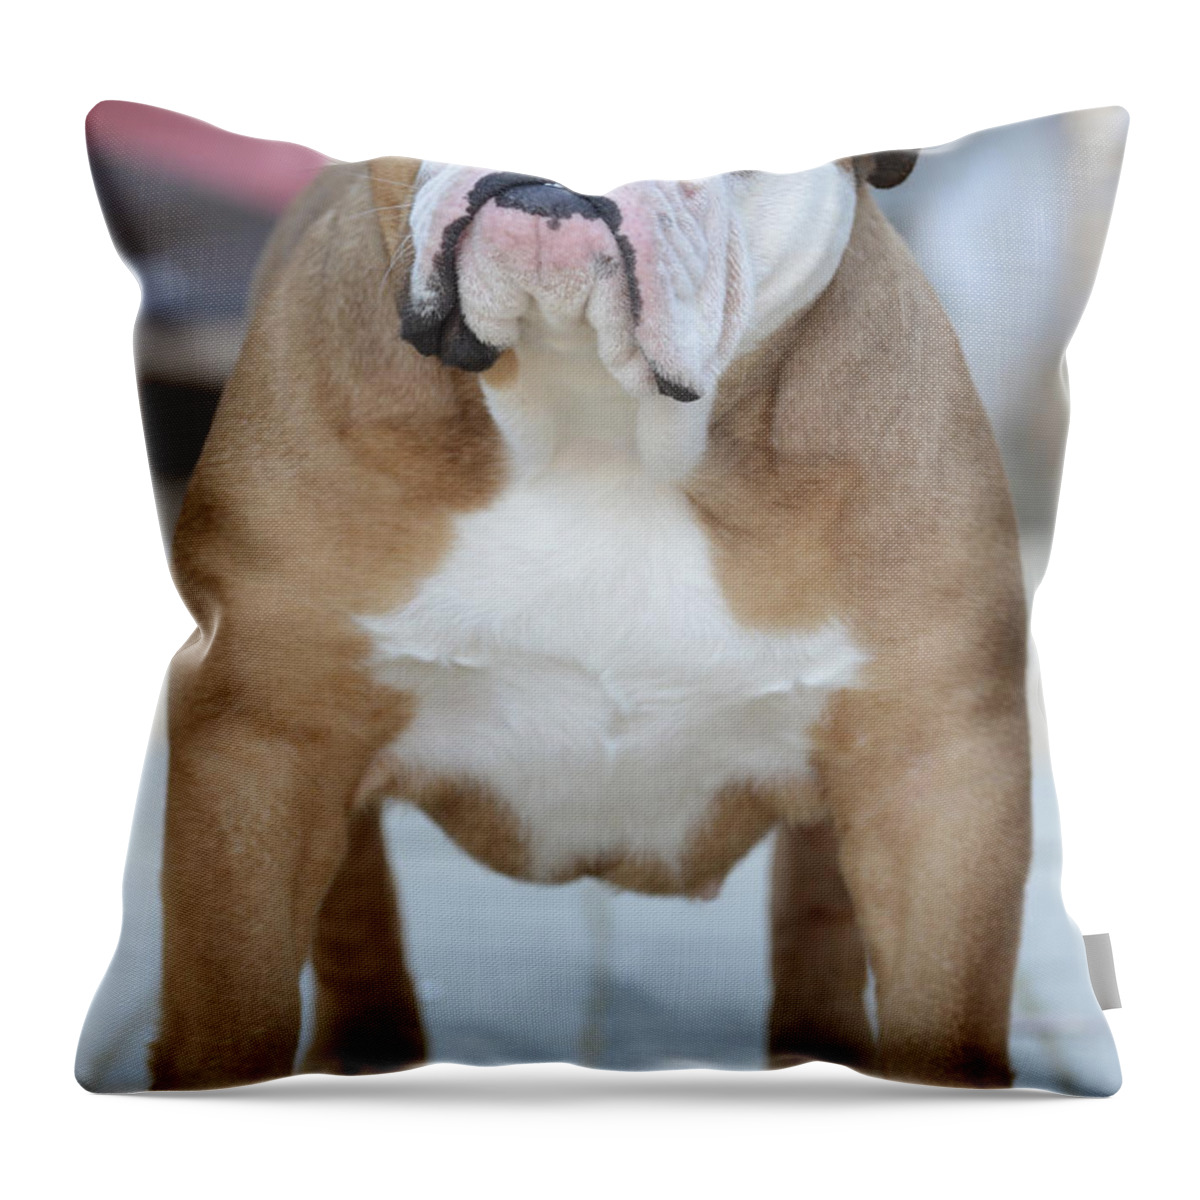 English Bulldog Throw Pillow featuring the photograph English Bulldog by Amir Paz